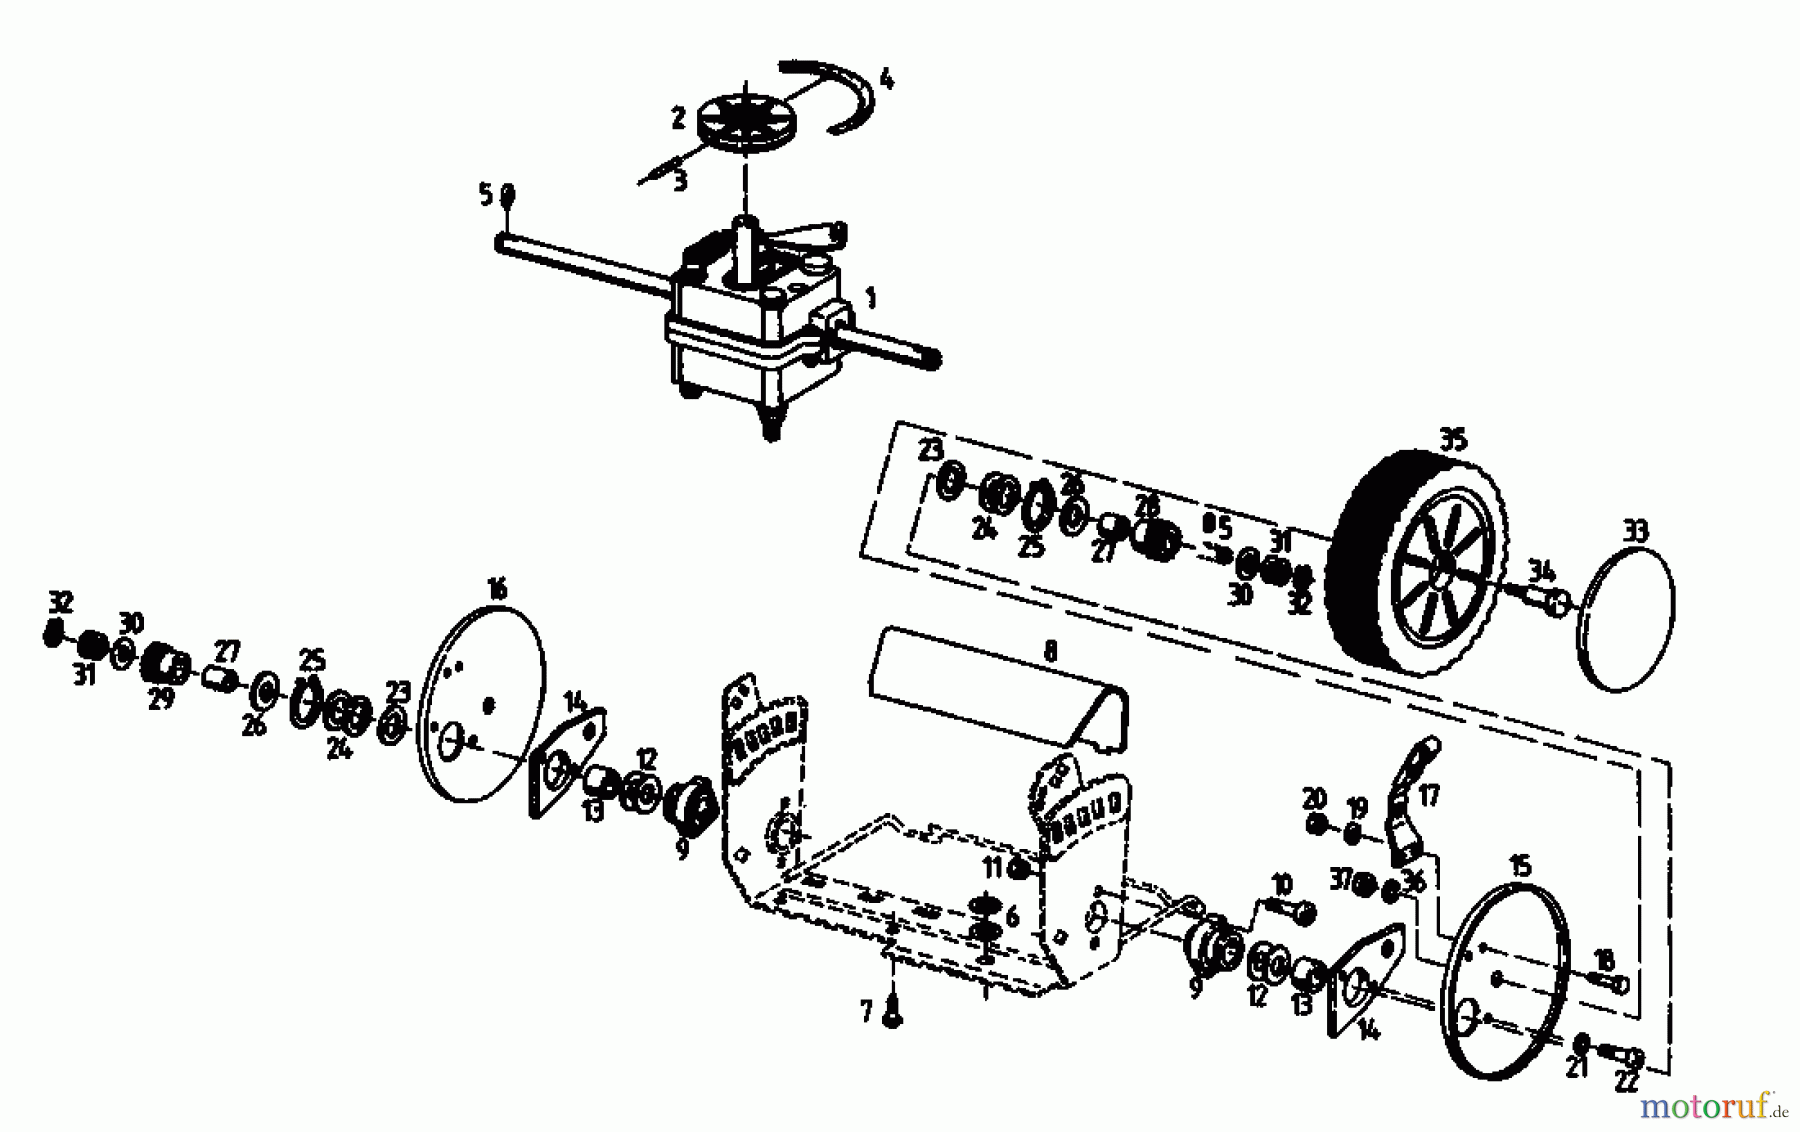  Kmg Petrol mower self propelled KMG 46 BA 04025.02  (1994) Gearbox, Wheels, Cutting hight adjustment